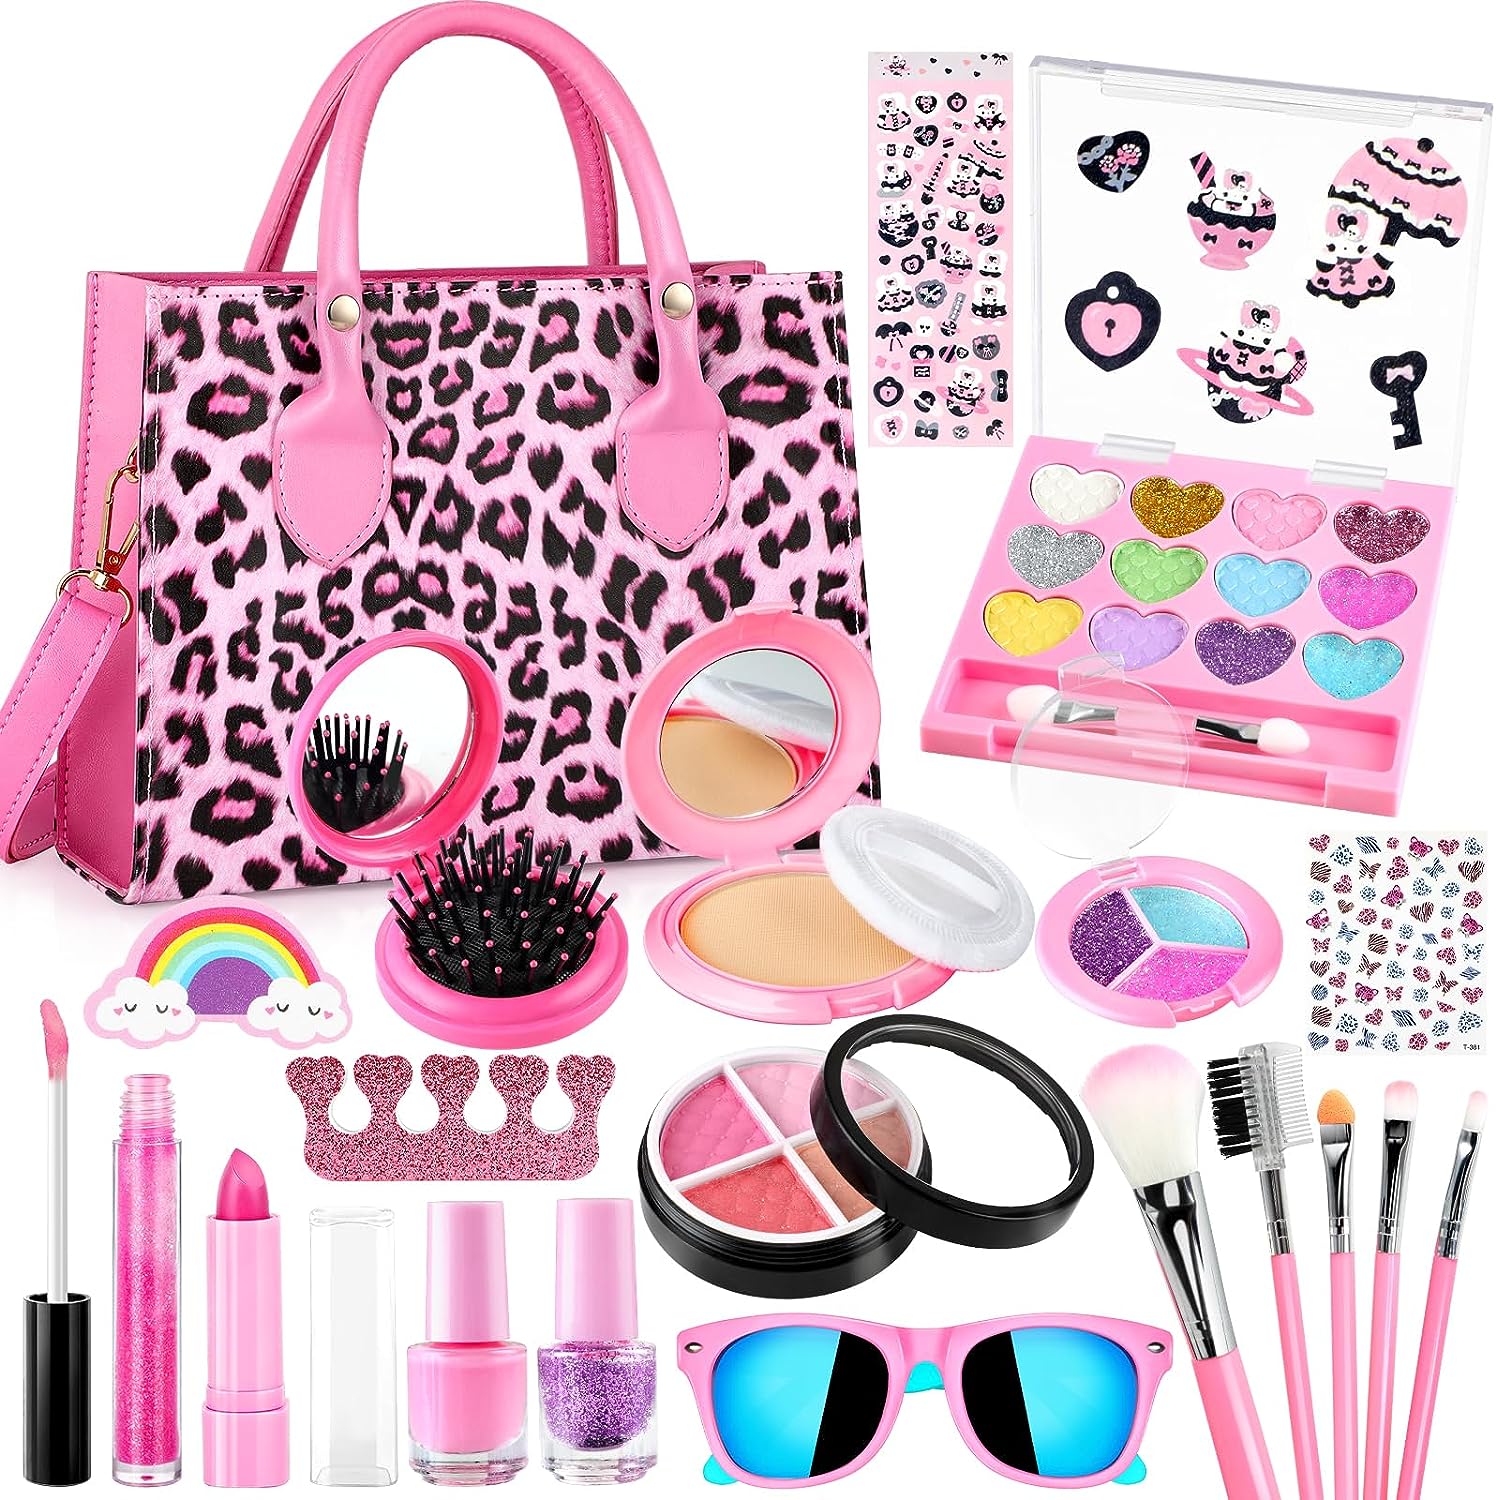 Hollyhi 48Pcs Kids Makeup Kit for Girl, Washable Play Make Up Toys